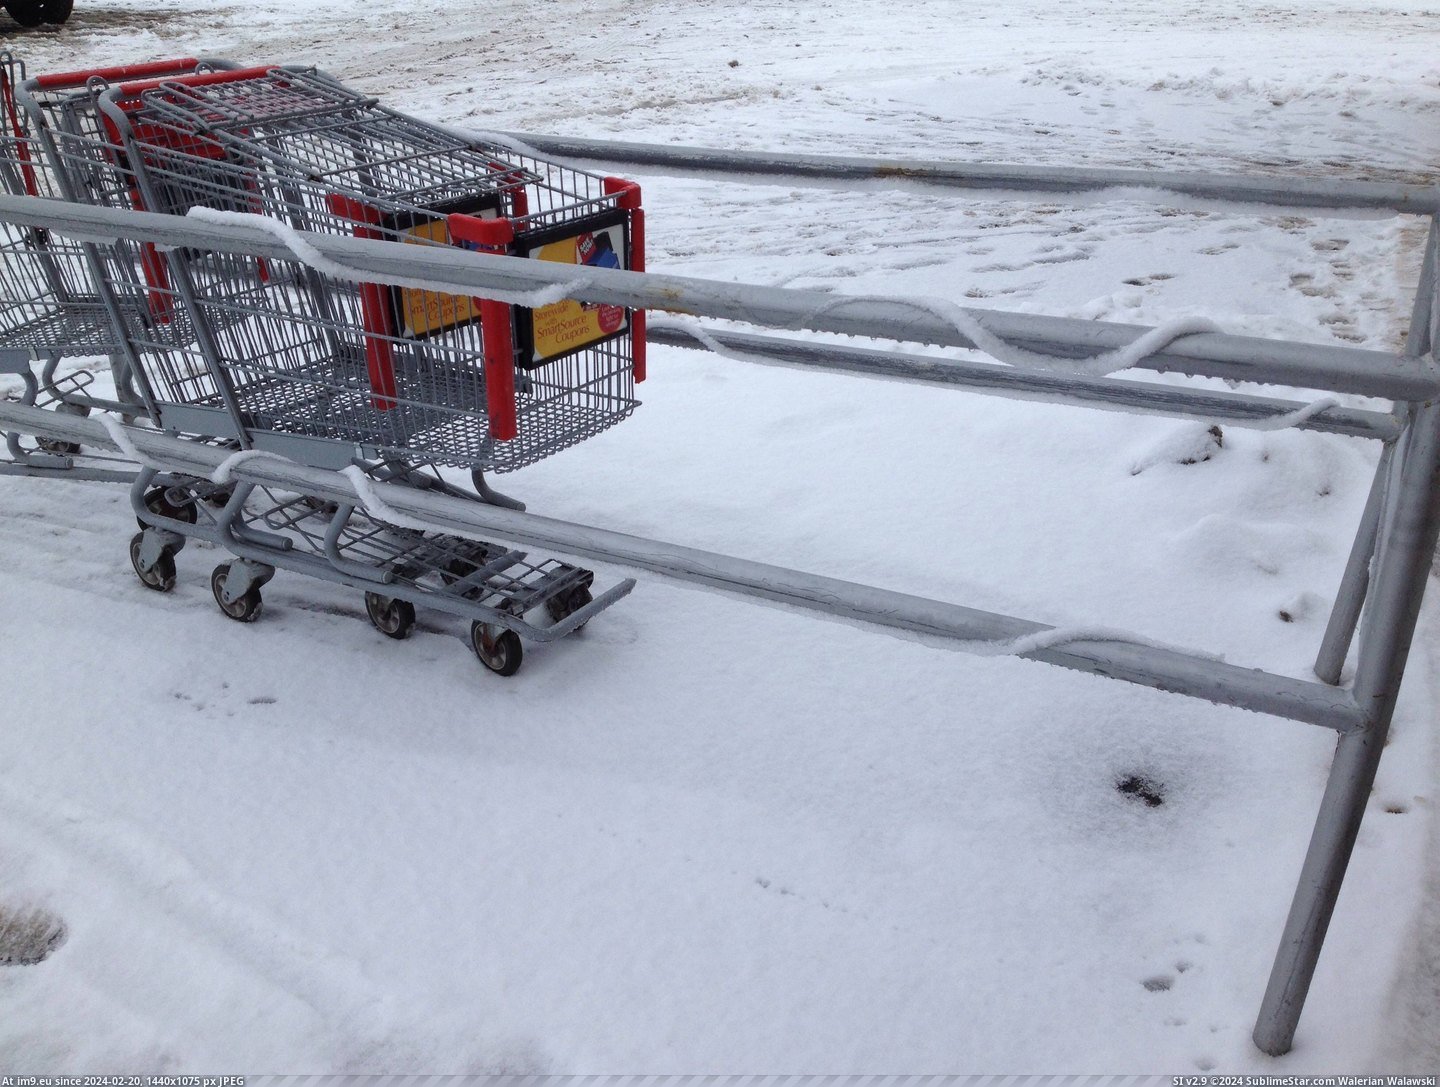 #Snow #Now #Snake #Return #Melted #Bar #Stuck [Mildlyinteresting] The snow on this cart return stuck to the bar as it melted, now looks like snow snake. Pic. (Bild von album My r/MILDLYINTERESTING favs))